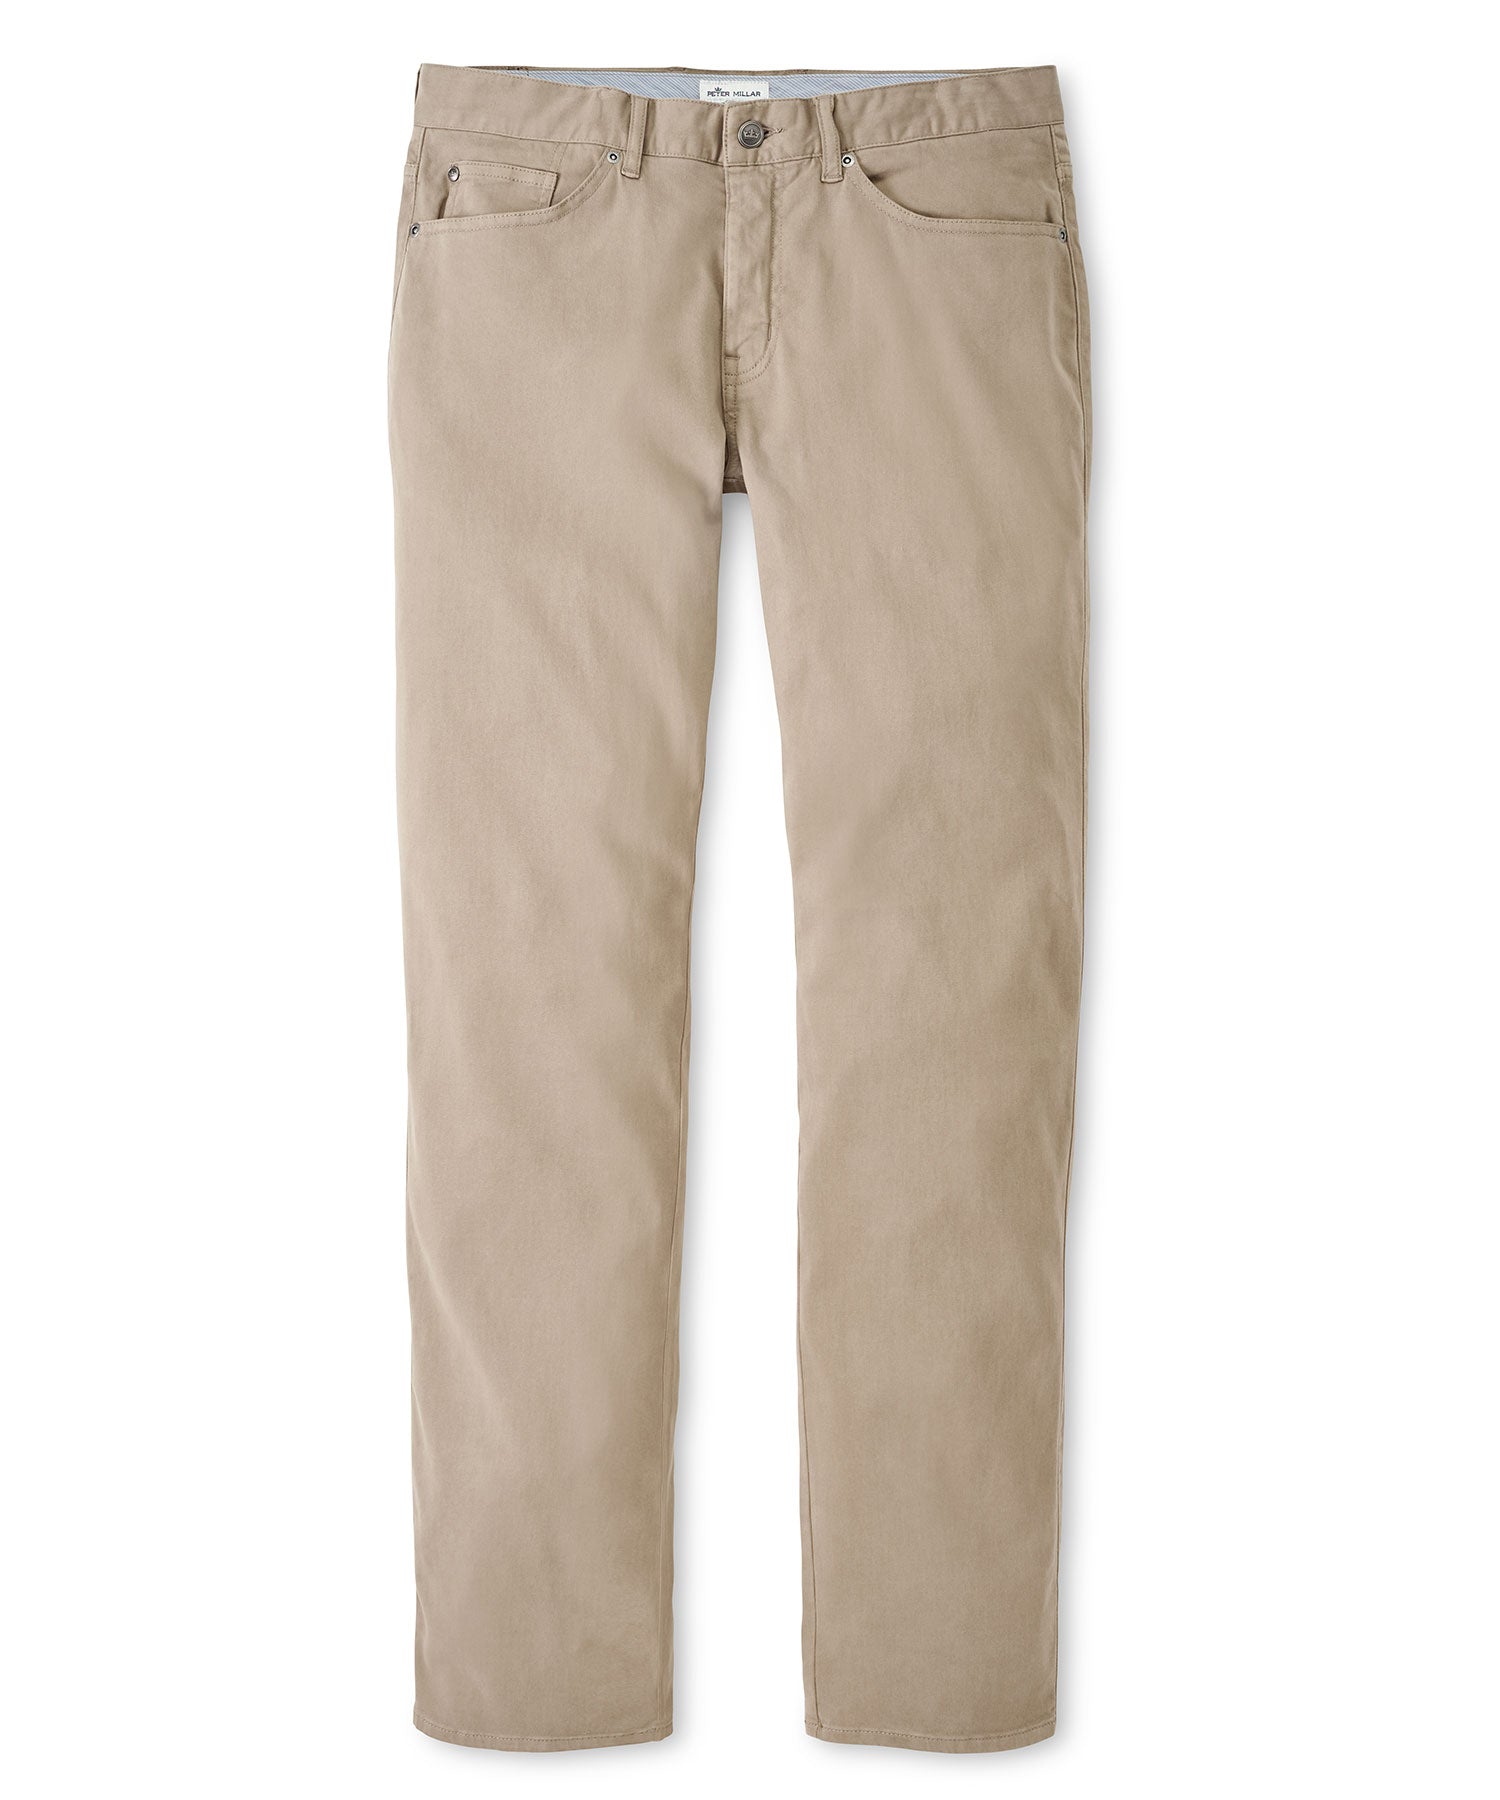 Peter Millar Men's Solid Khaki Cotton Modal Blend 5 Pocket Pants